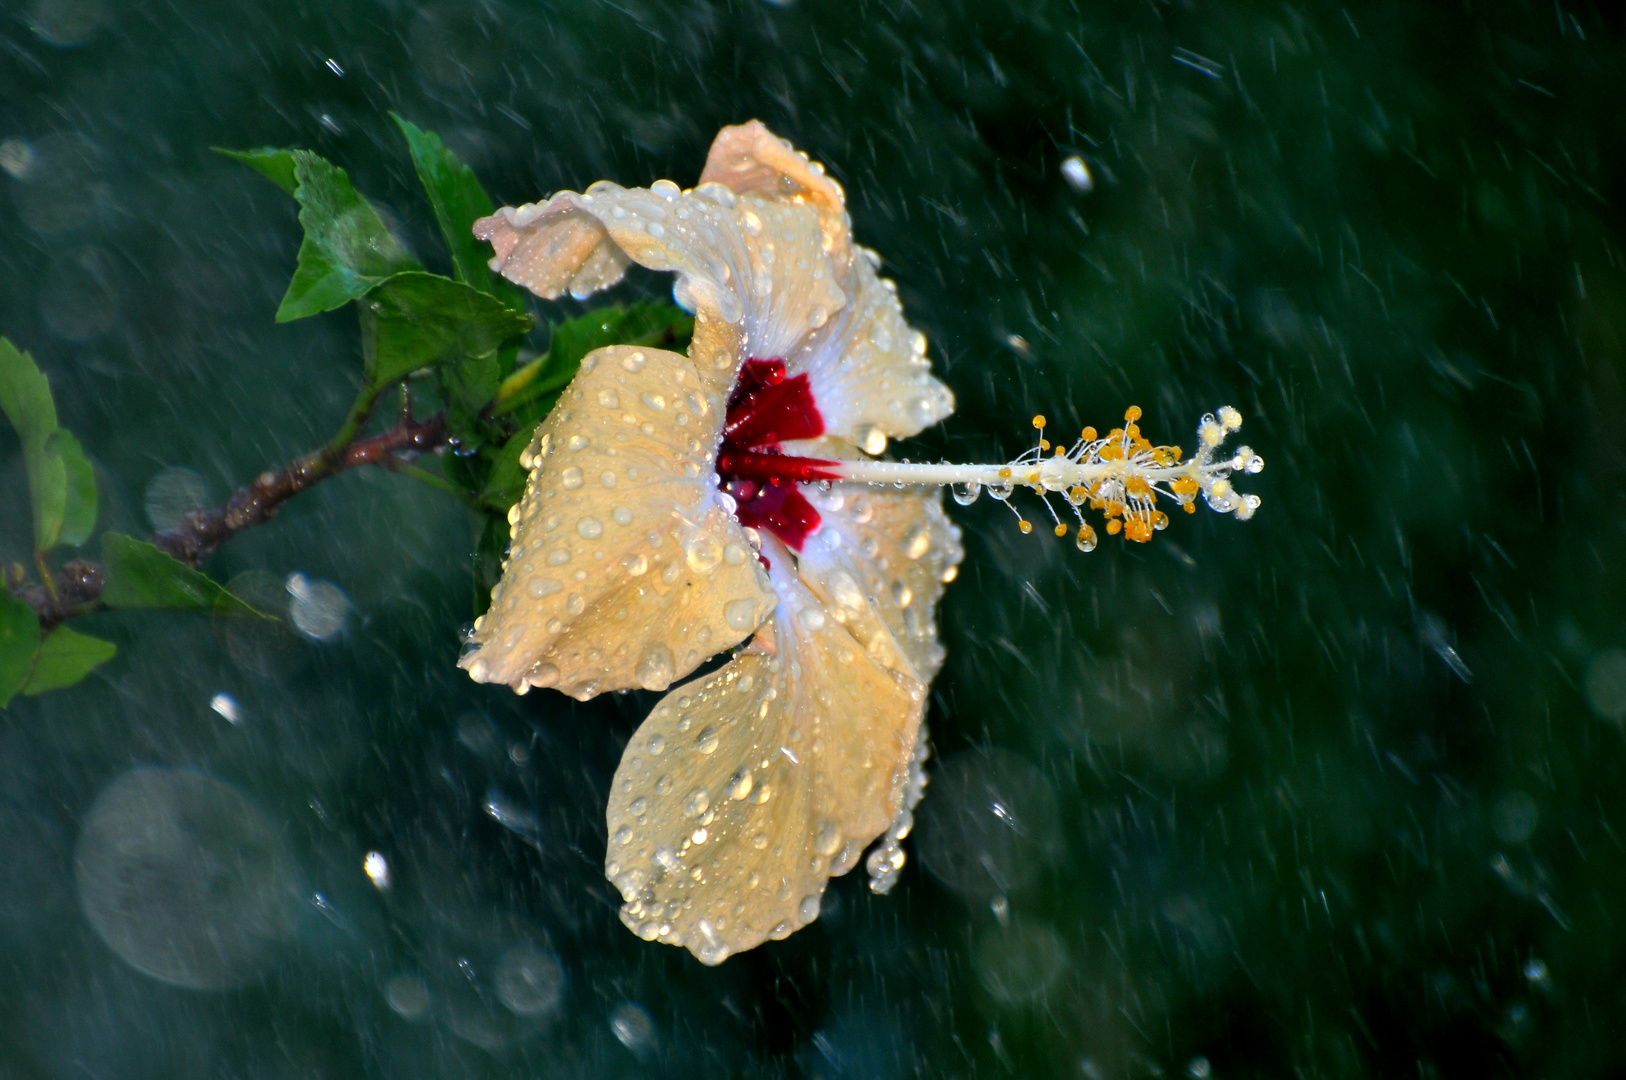 ibiscus sous la pluie